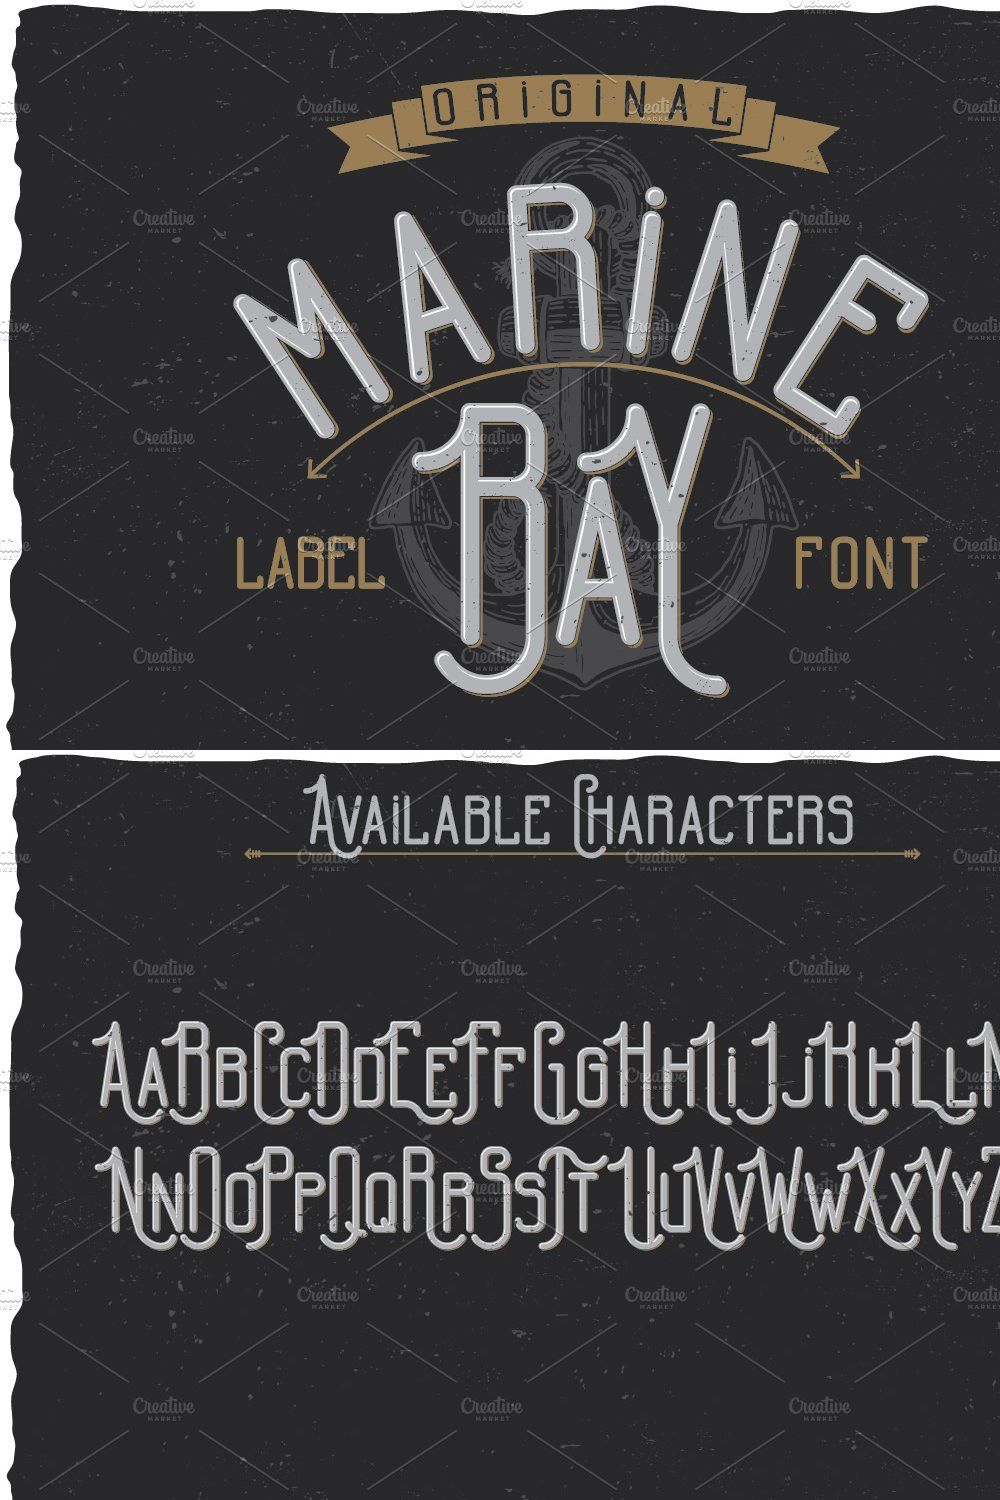 Marine Bay Vintage Label Typeface pinterest preview image.